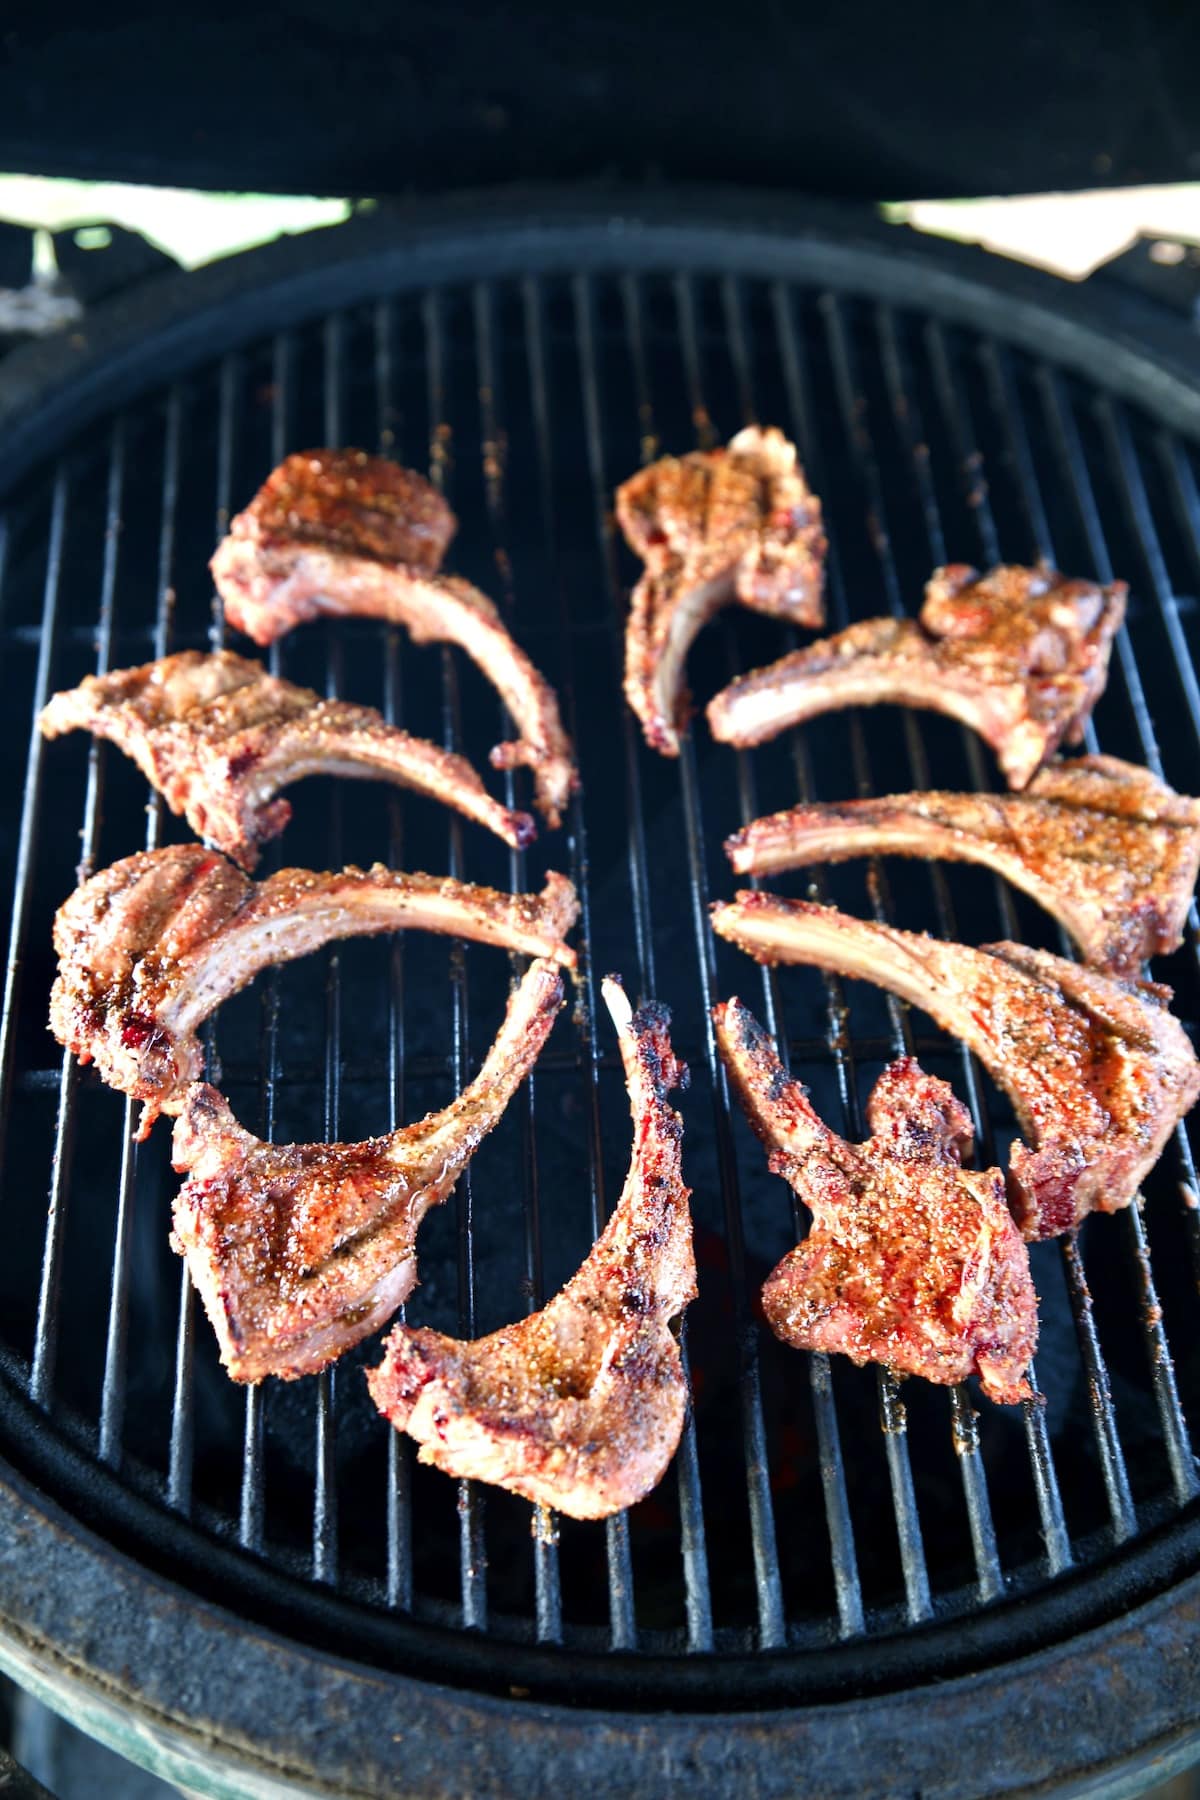 Bone in venison steaks on a grill in a circular pattern.